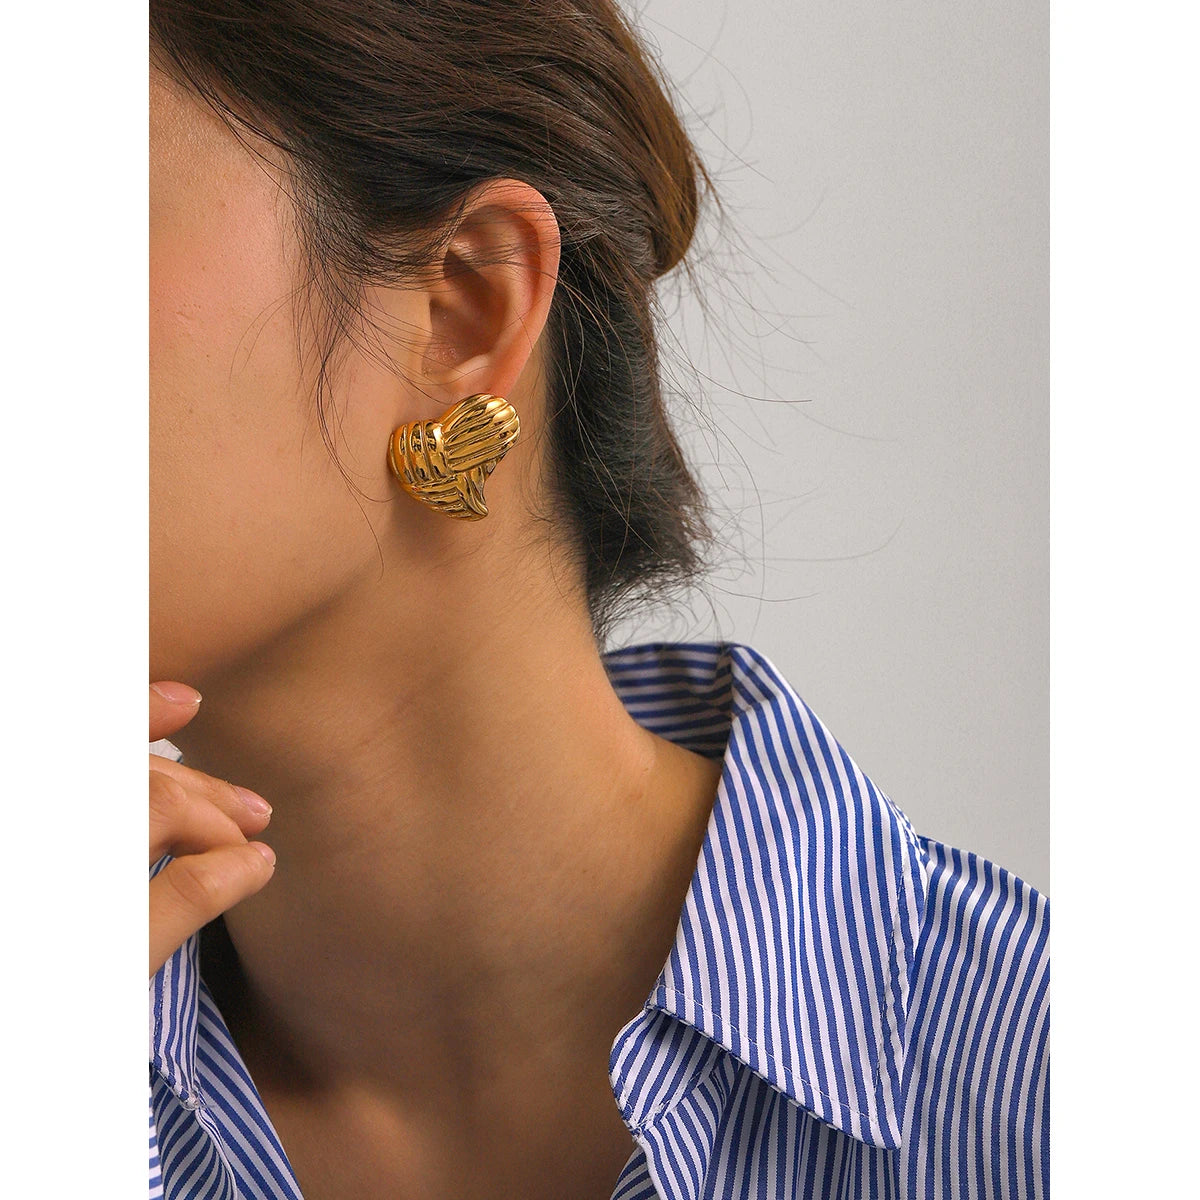 Vintage Style Heart Shape Stud Earrings Gold 18k Plated